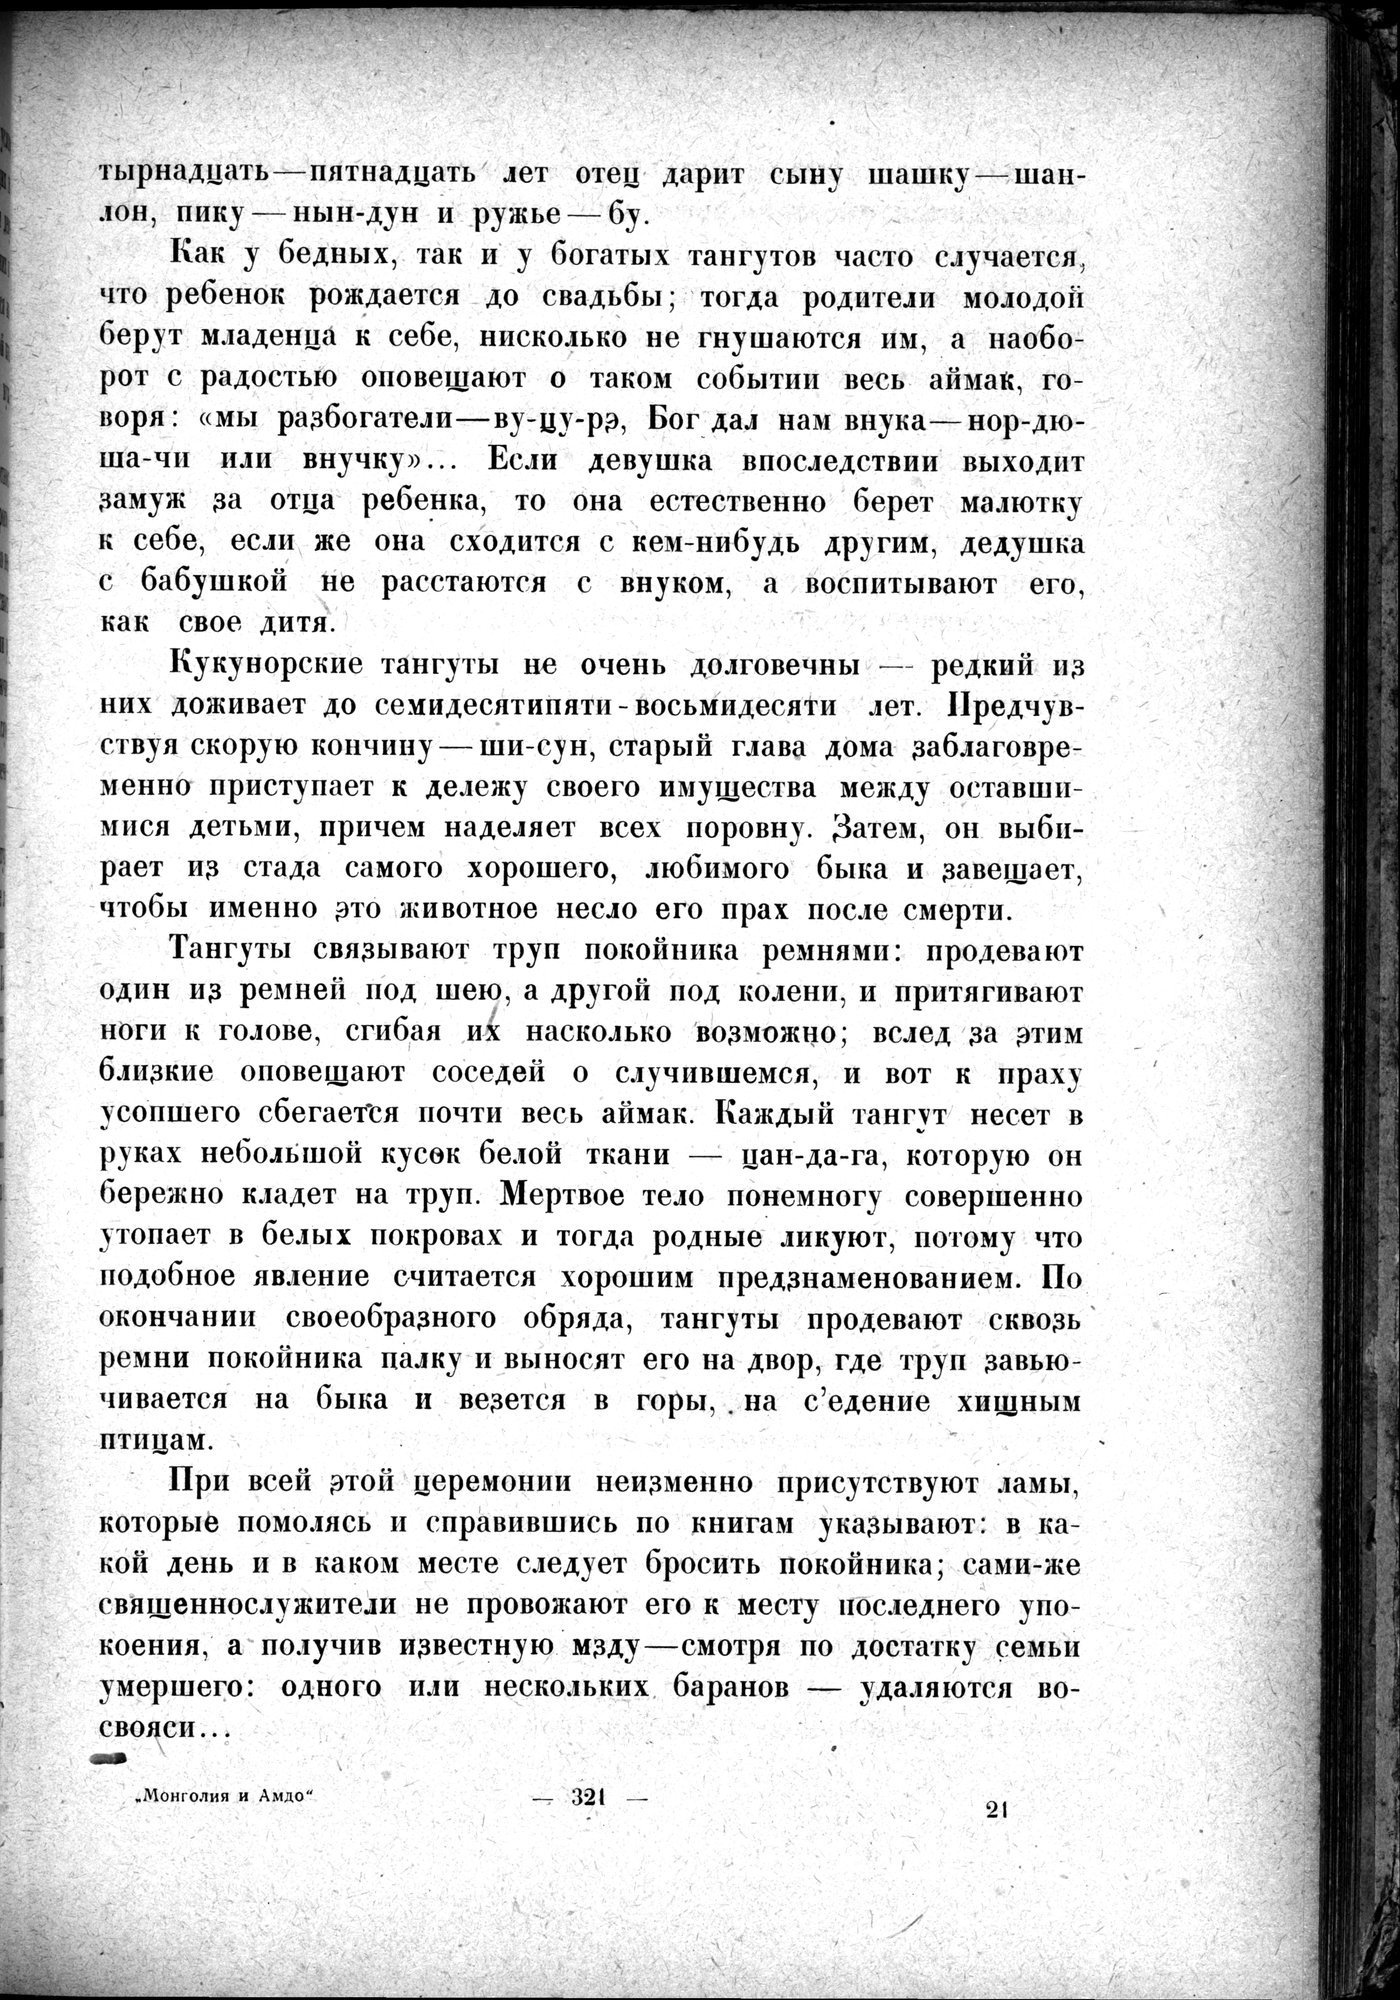 Mongoliya i Amdo i mertby gorod Khara-Khoto : vol.1 / Page 371 (Grayscale High Resolution Image)